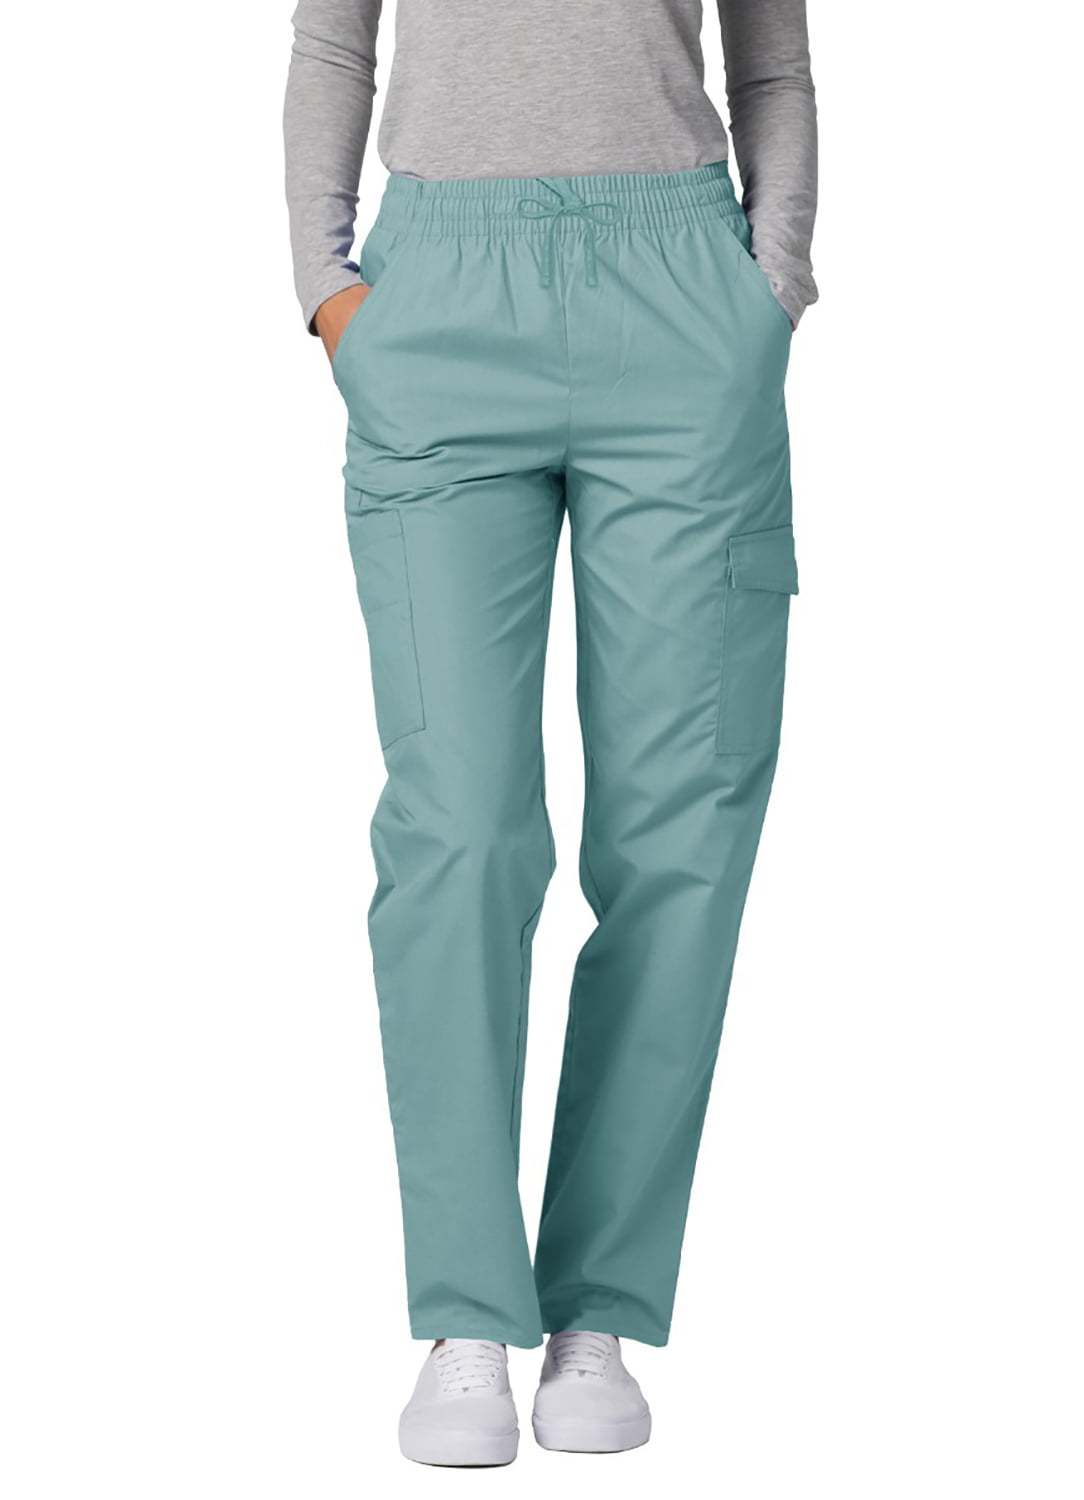 Adar Medical Uniform Women's Pull On Scrub Pants Size XL White Cargo Pockets